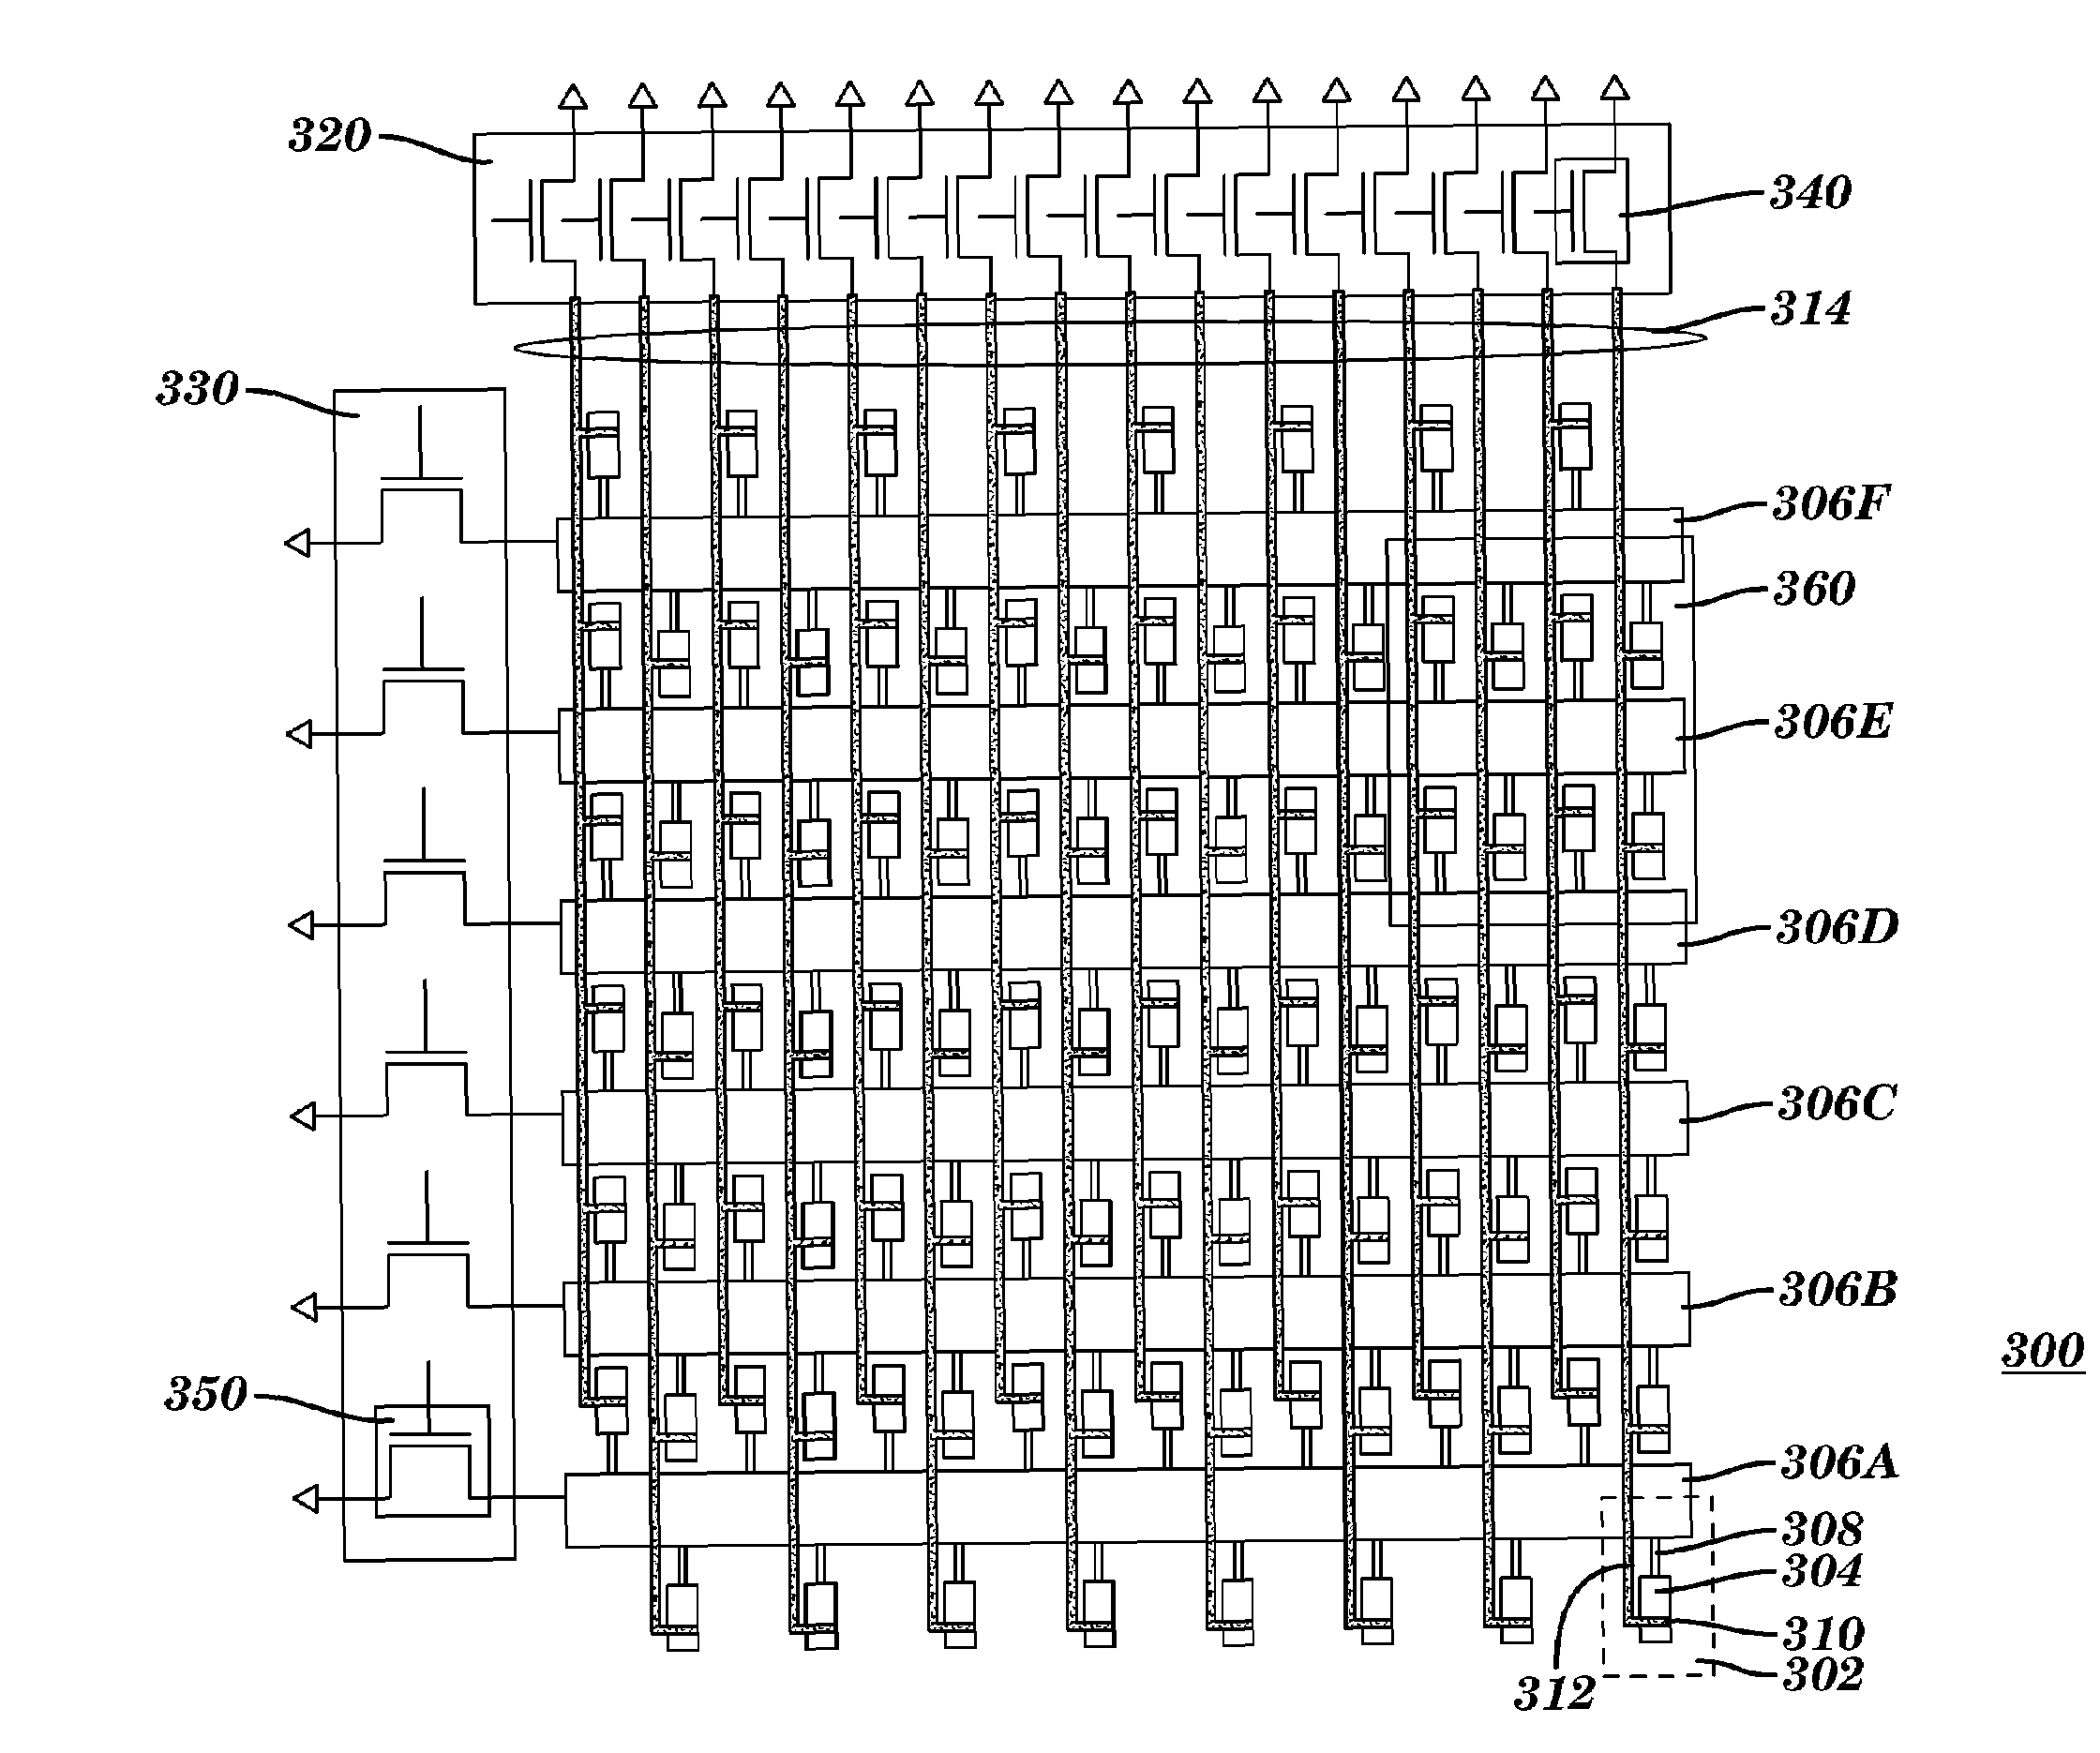 Dense semiconductor fuse array